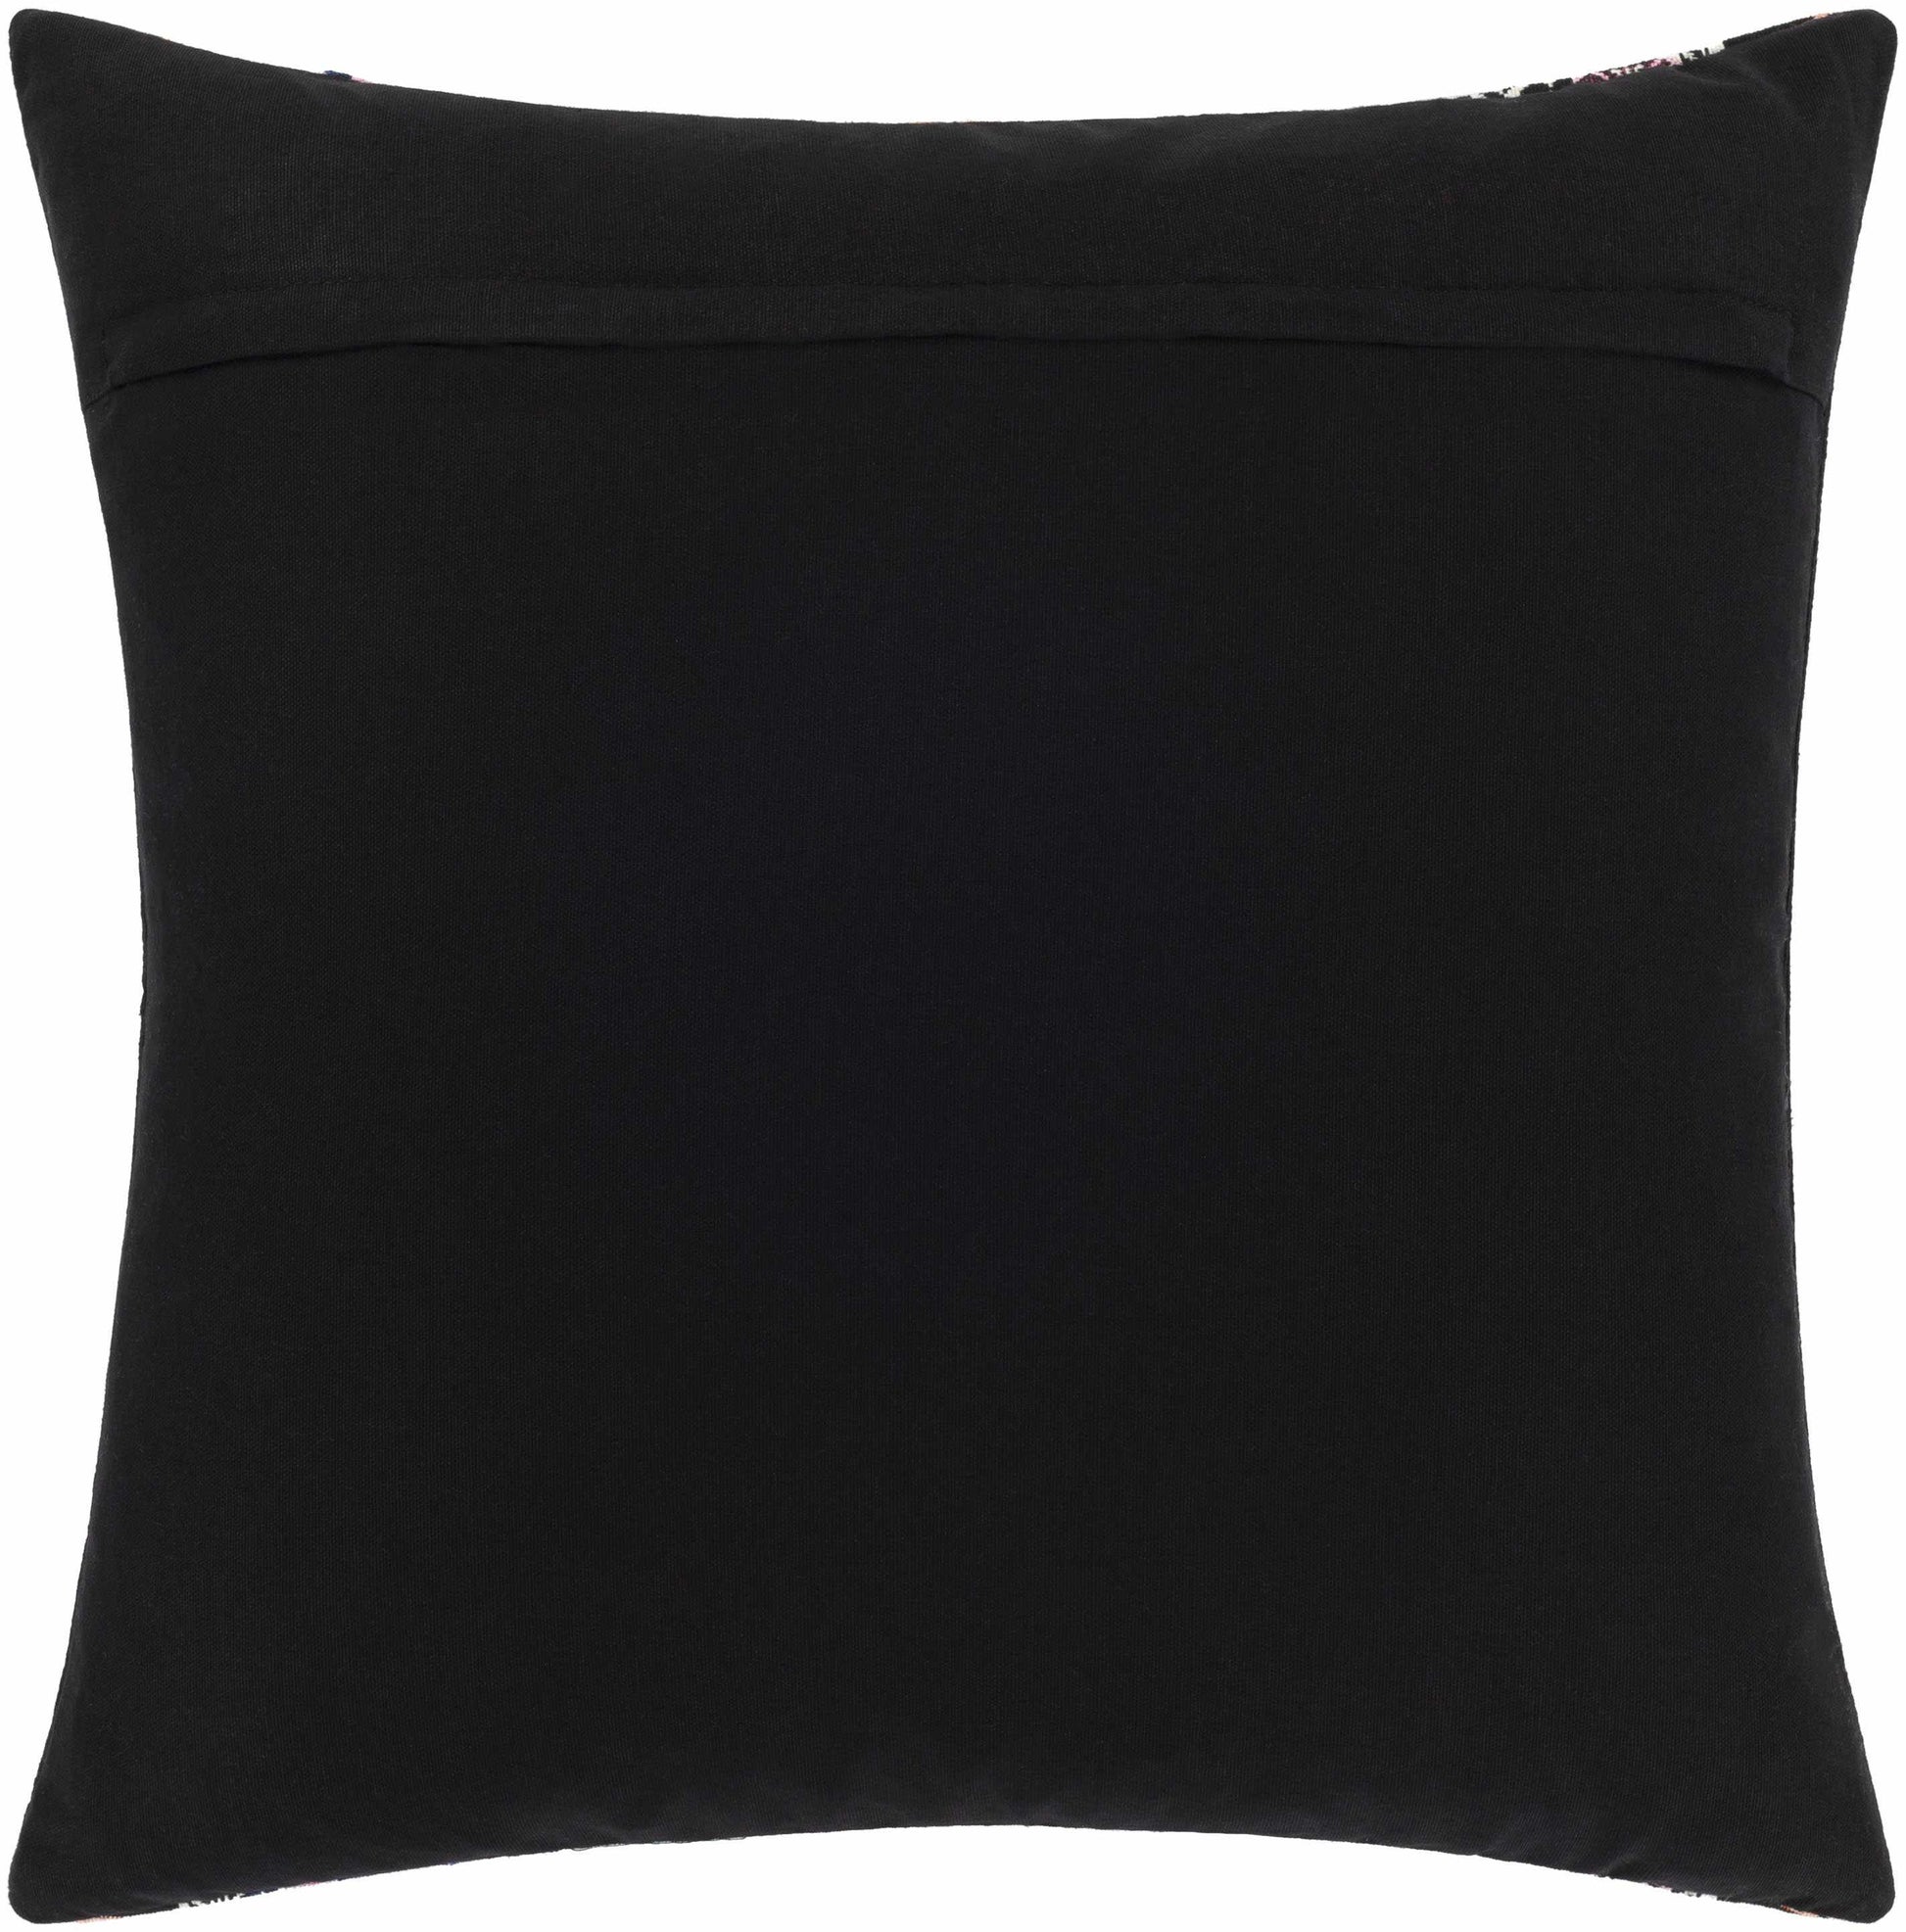 Peruwelz Black Pillow Cover